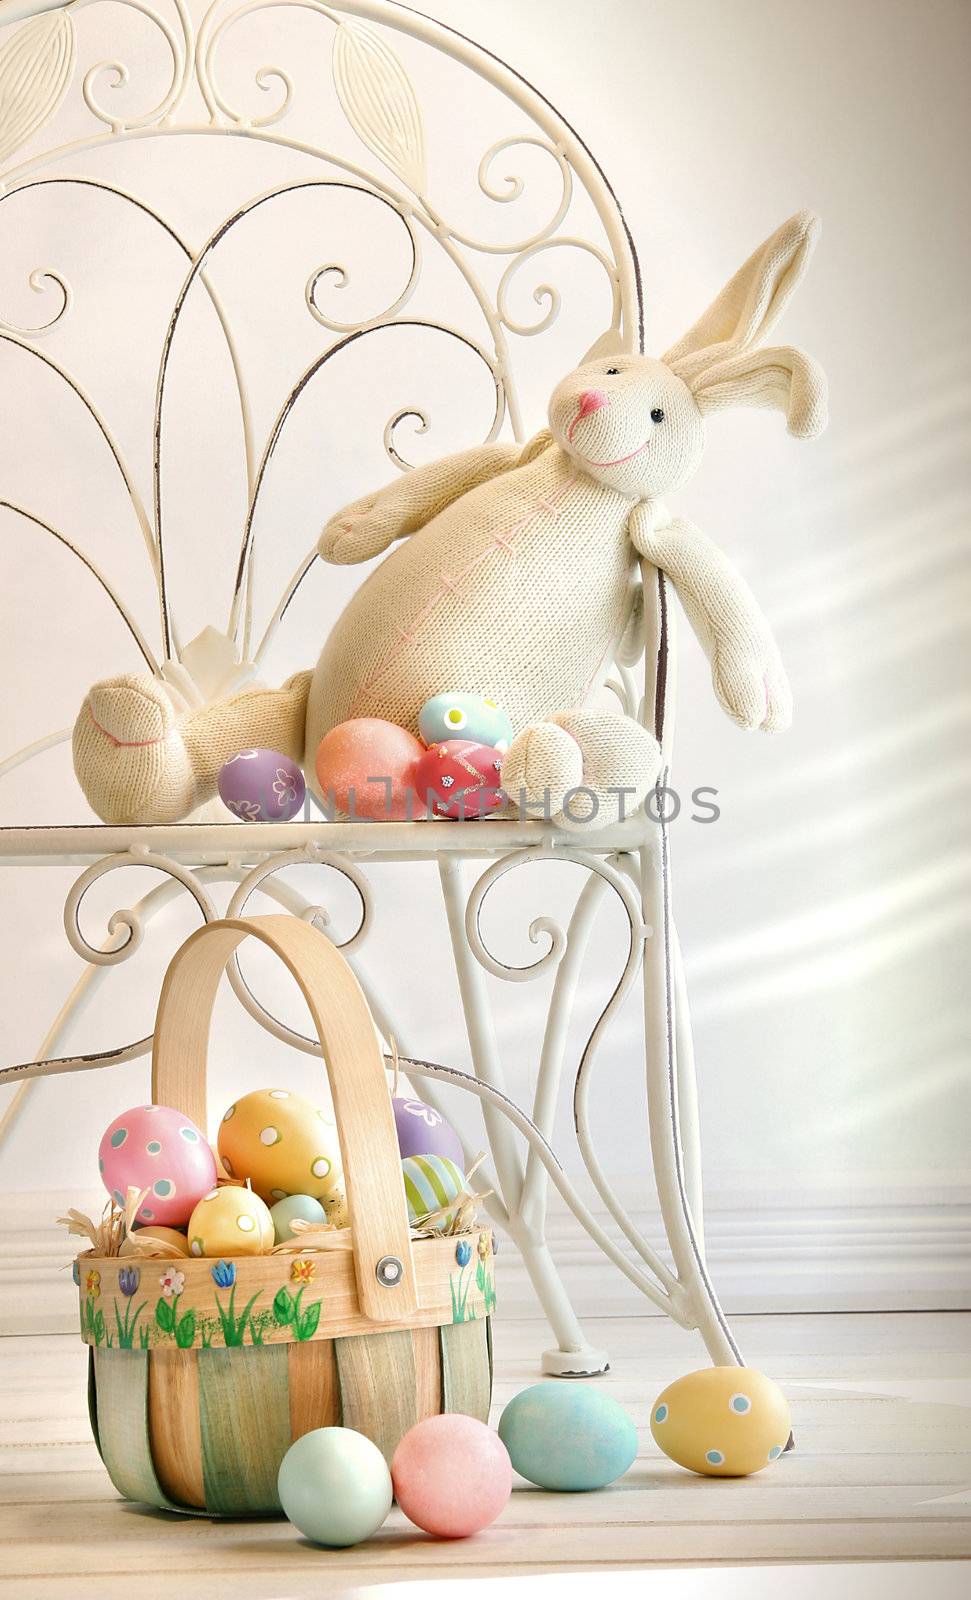 Stuffed rabbit on iron chair  by Sandralise